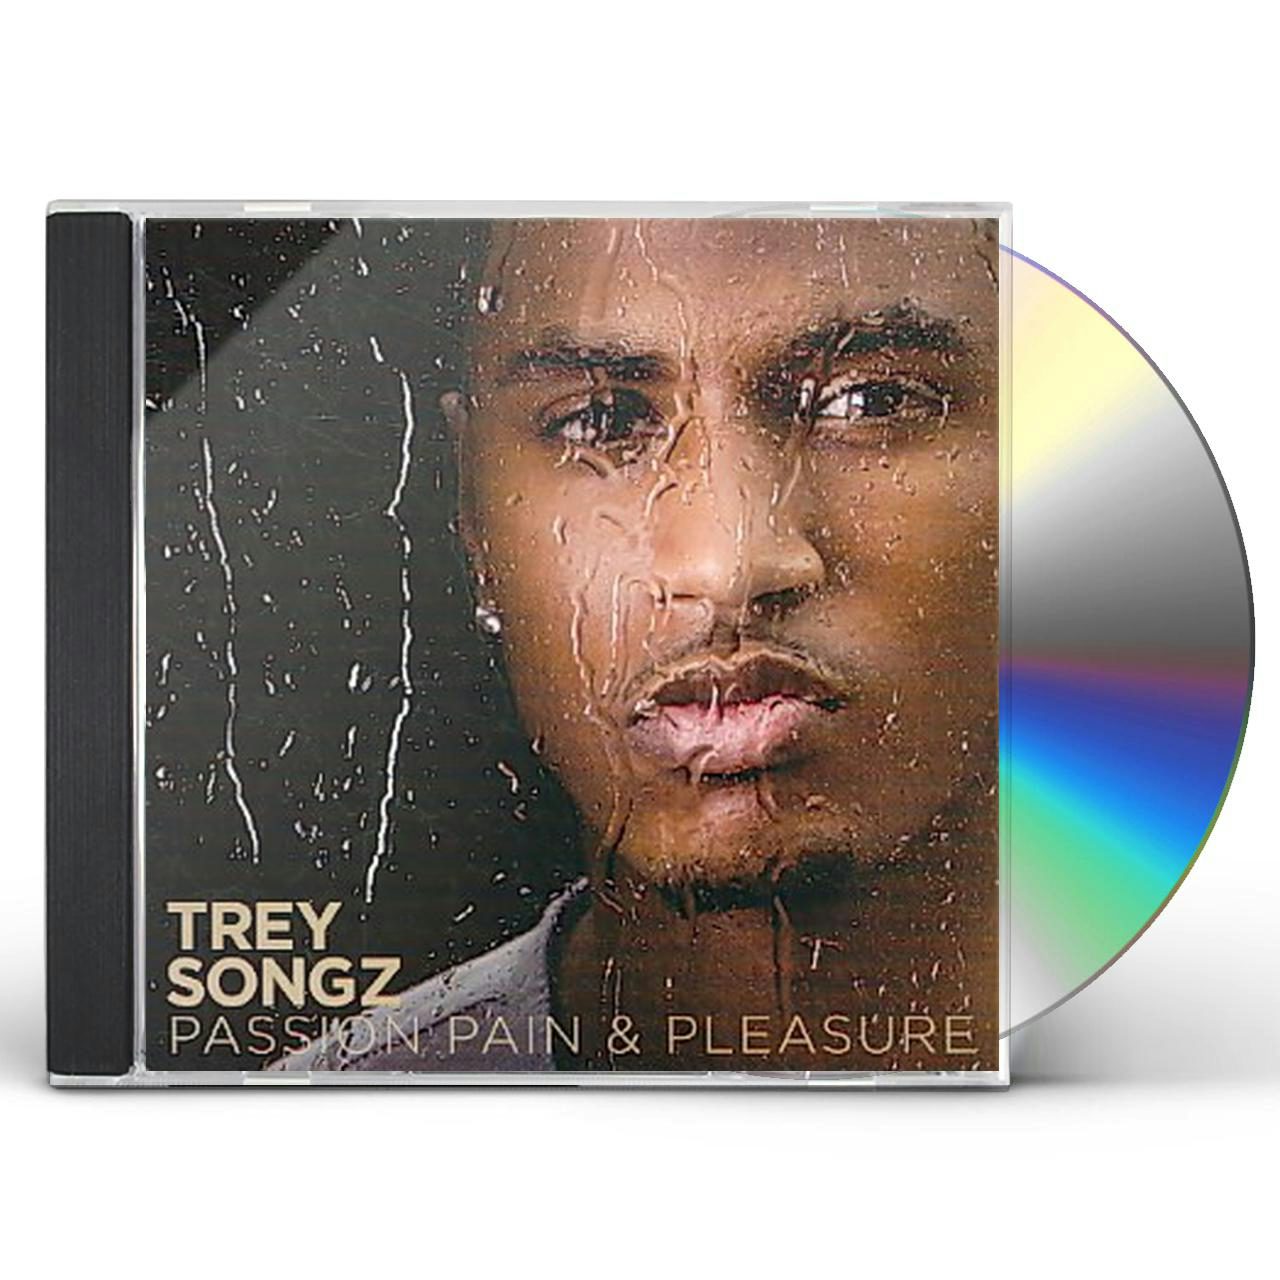 trey songz album download passion pain and pleasure